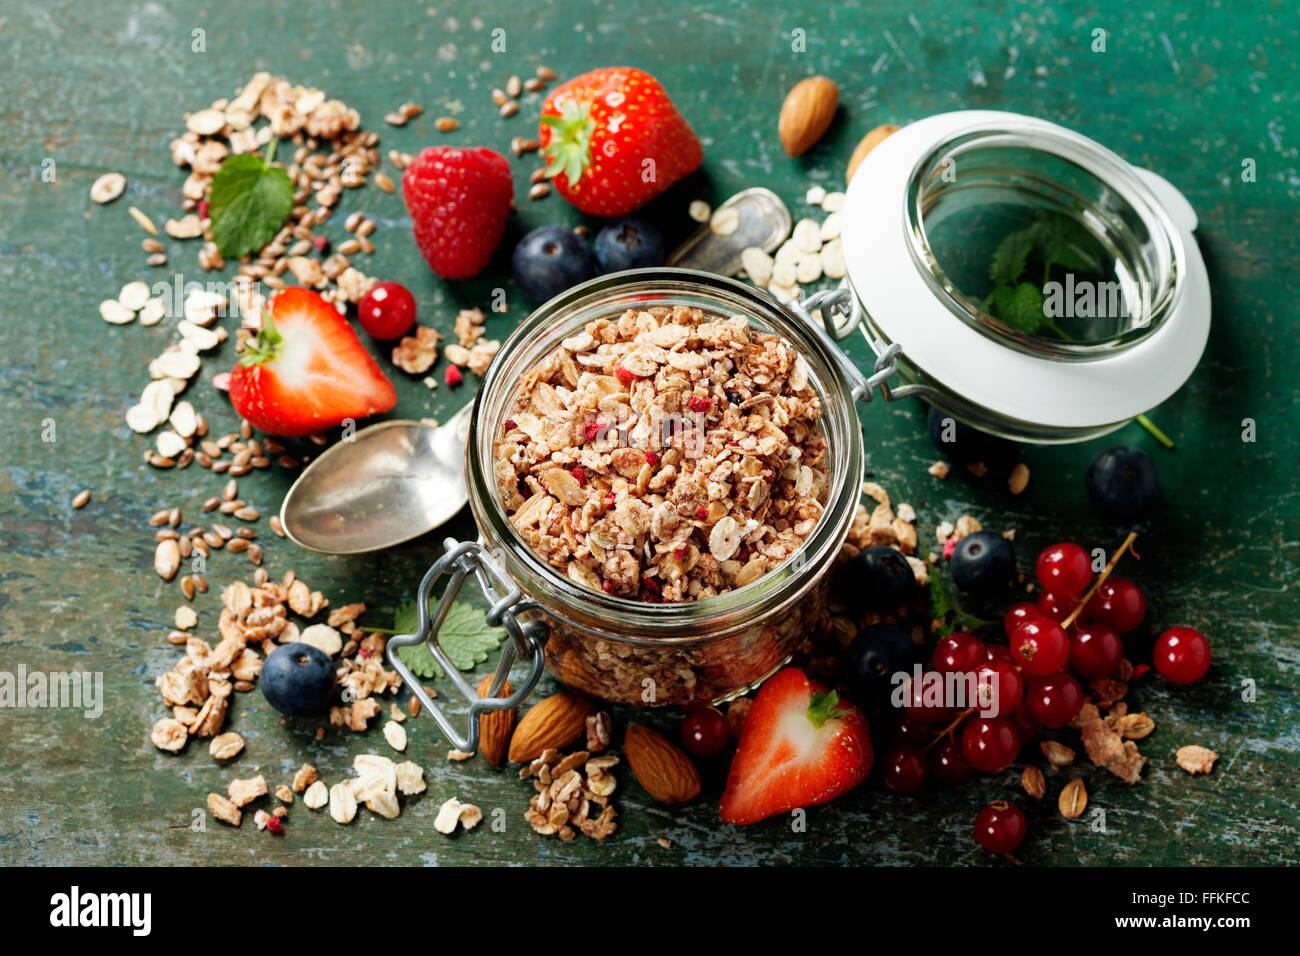 Healthy breakfast of muesli, berries with yogurt and seeds on dark background. Stock Photo